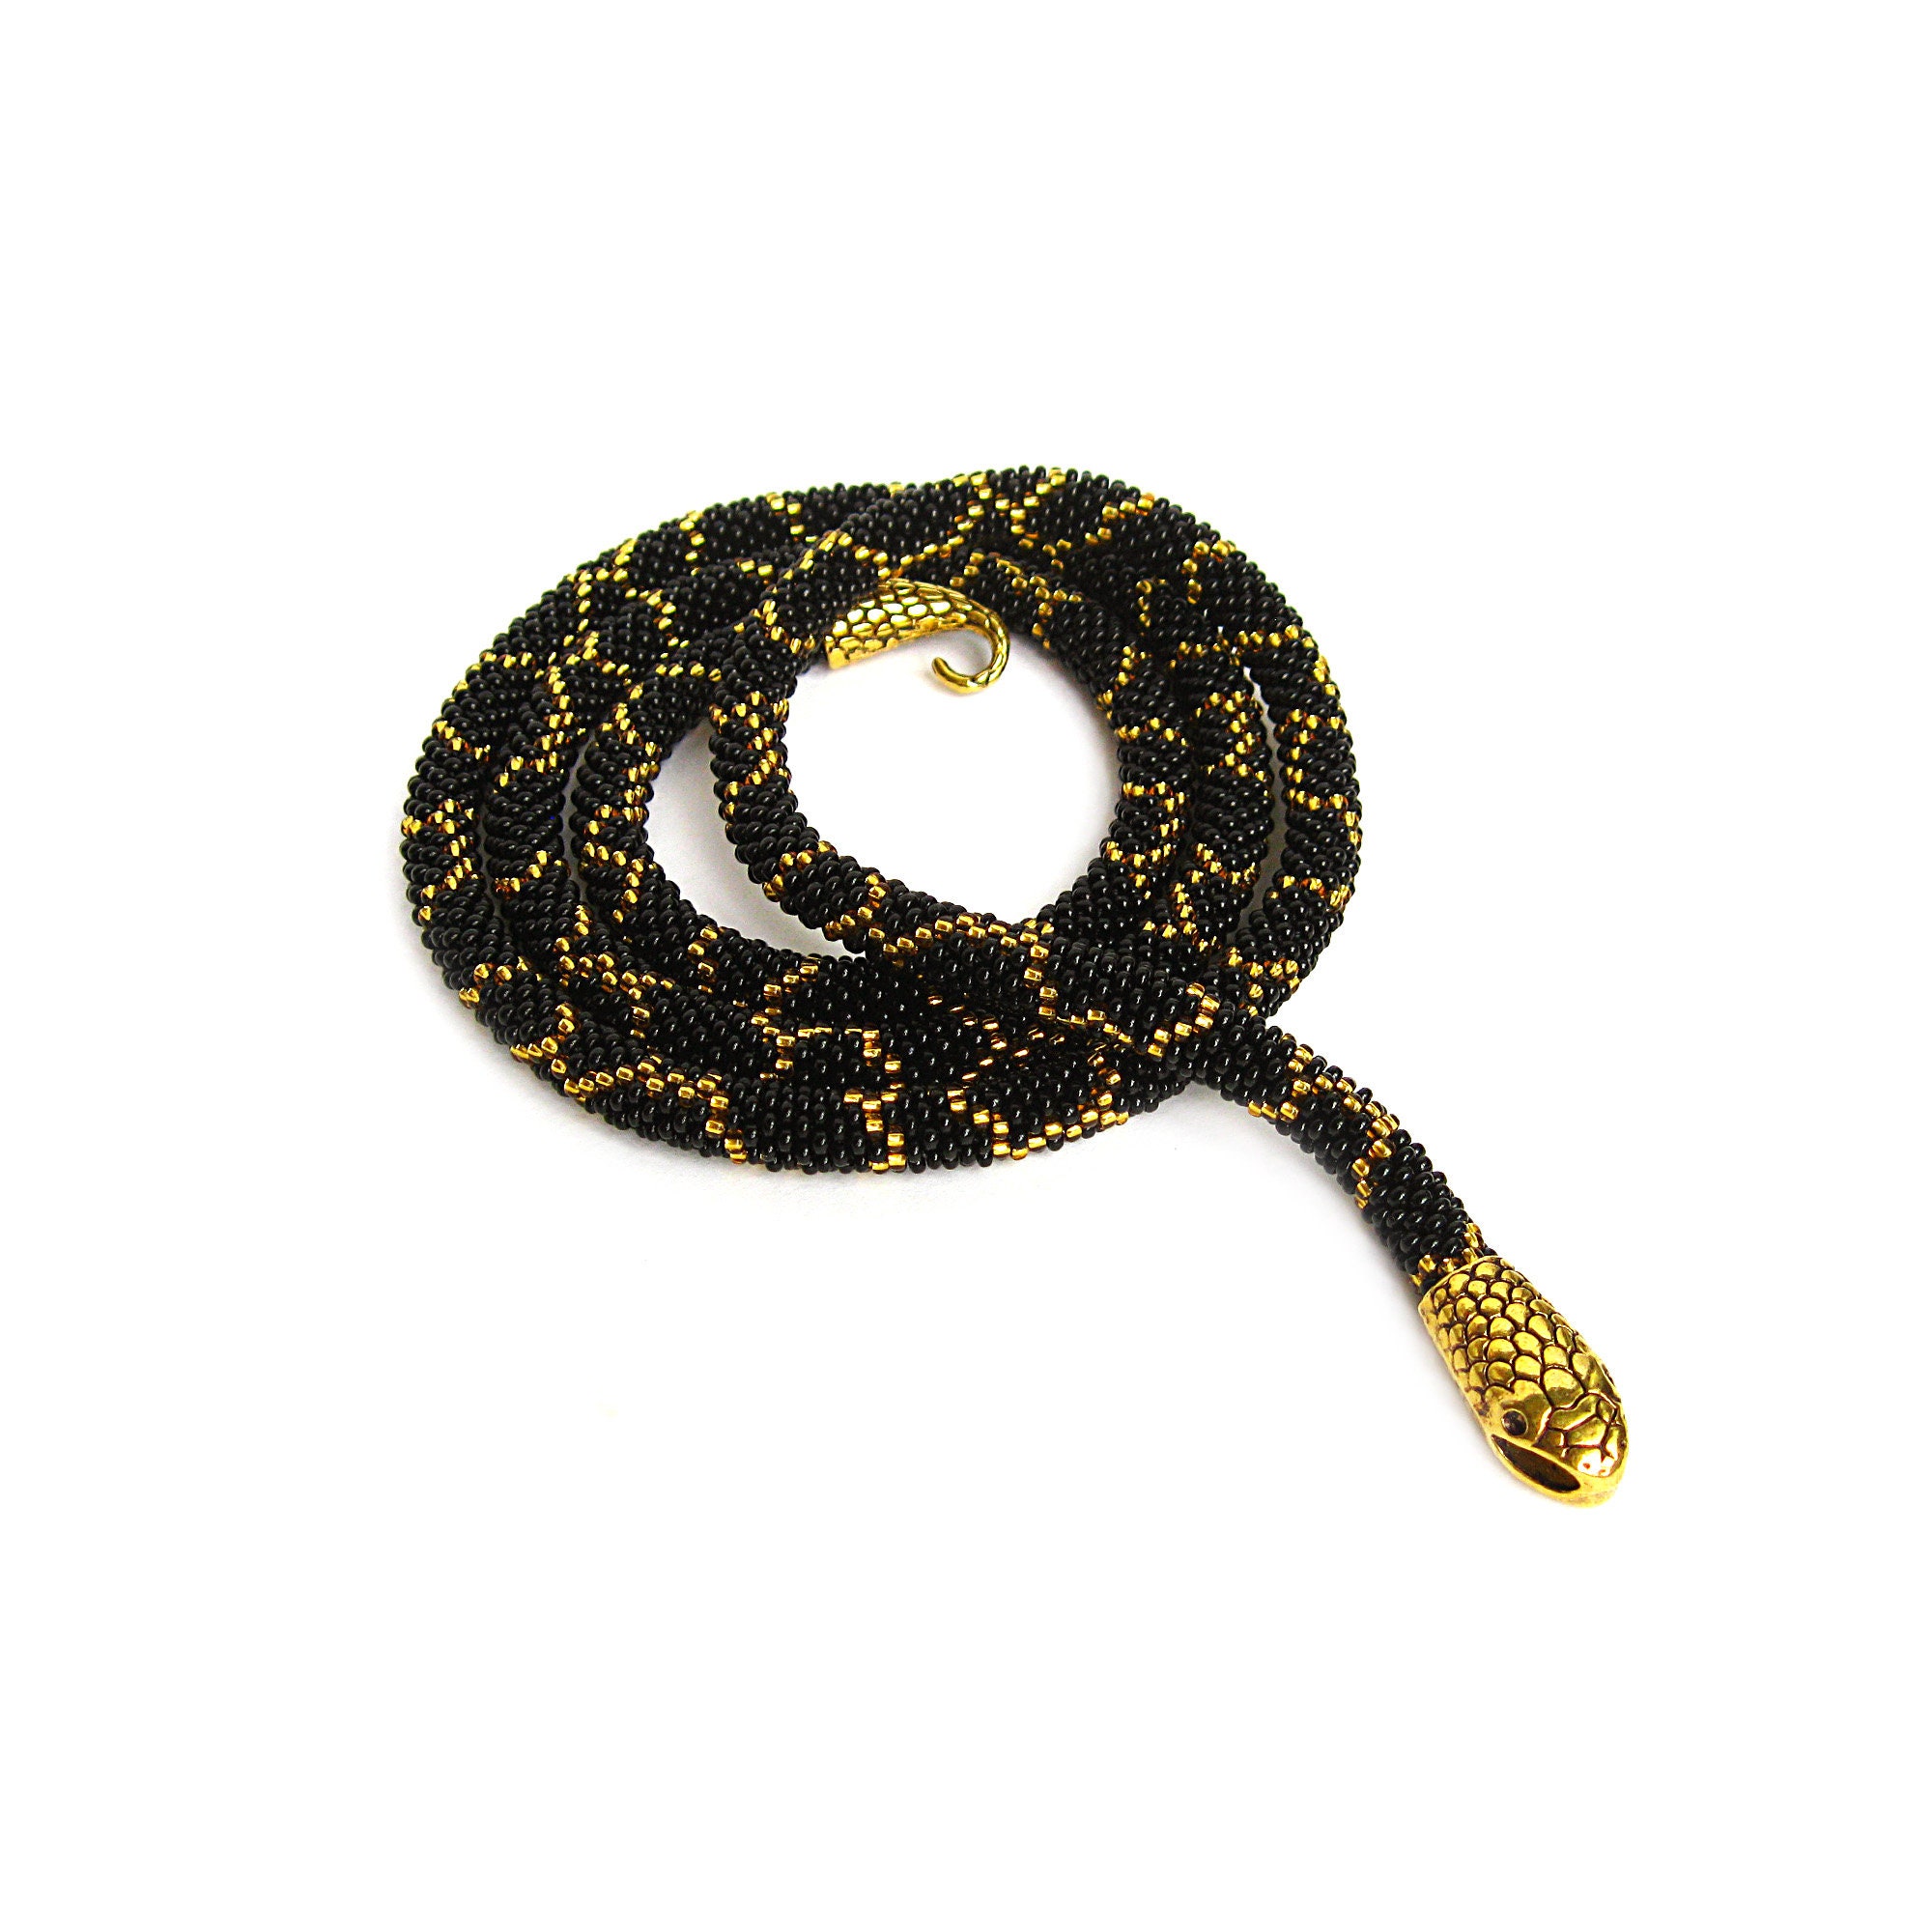 Beaded Black Snake Necklace Gold Black Snake Ouroboros Day | Etsy